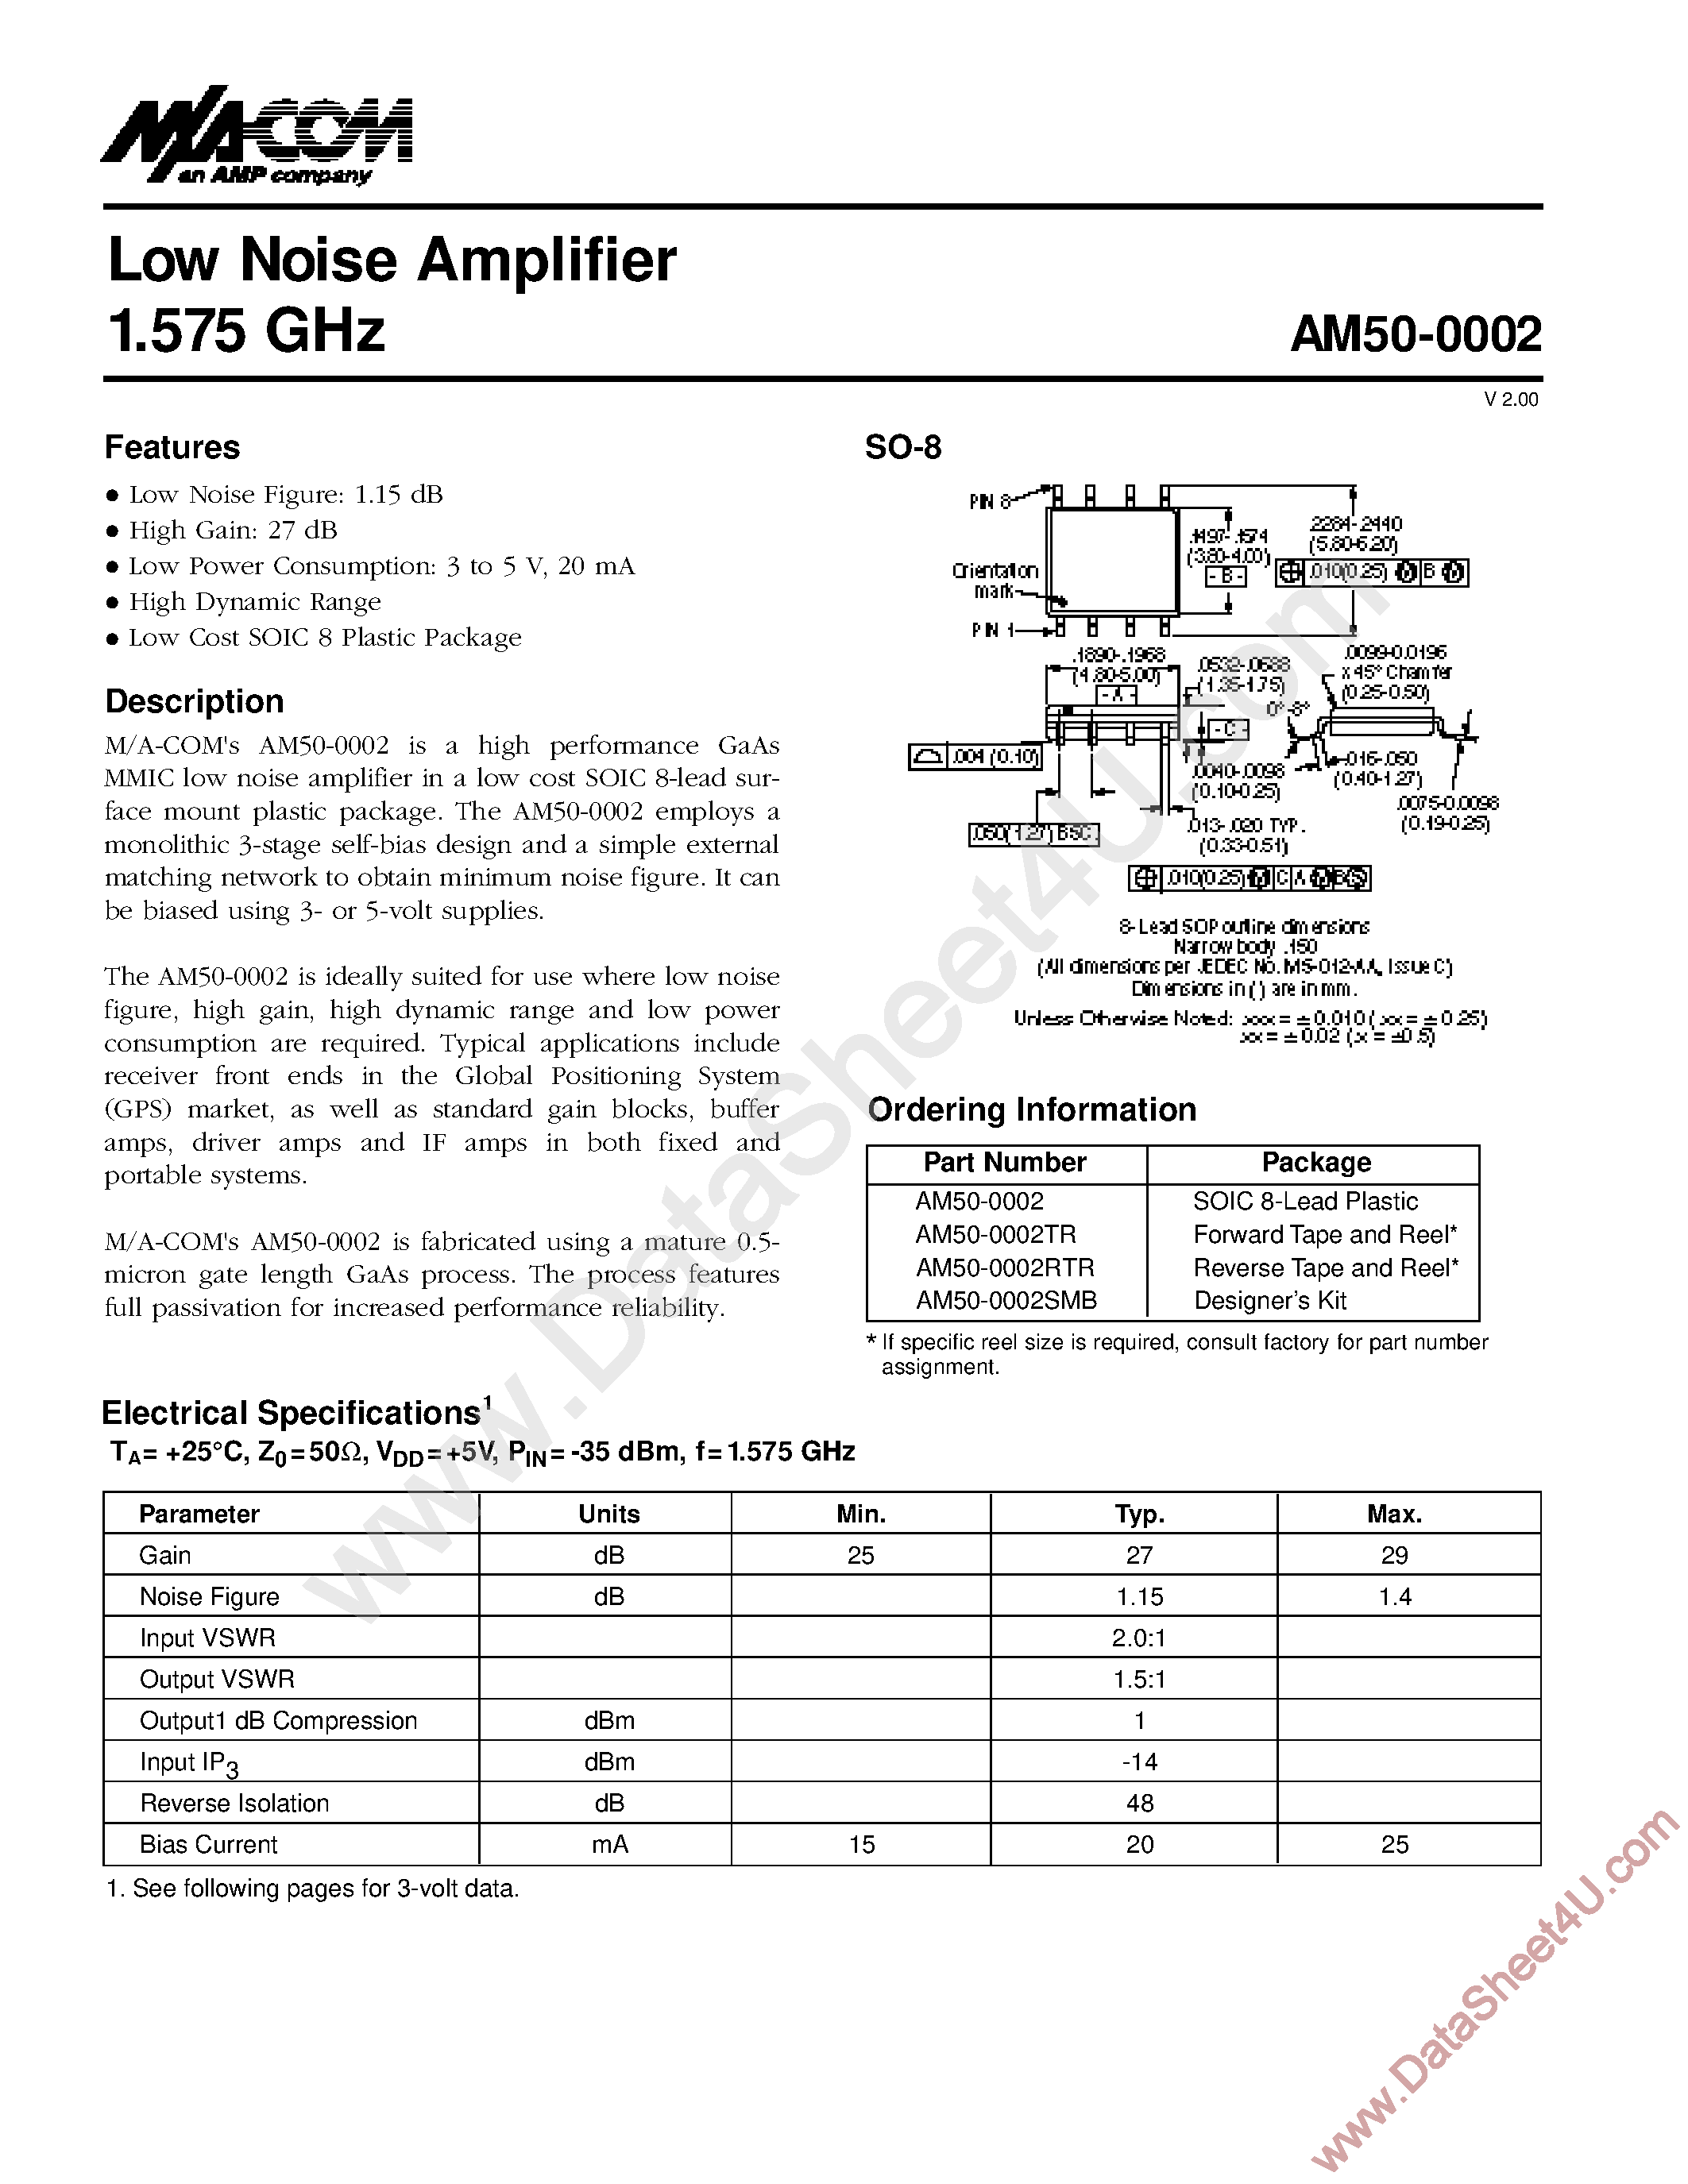 Datasheet AM50-0002 - Low Noise Amplifier page 1